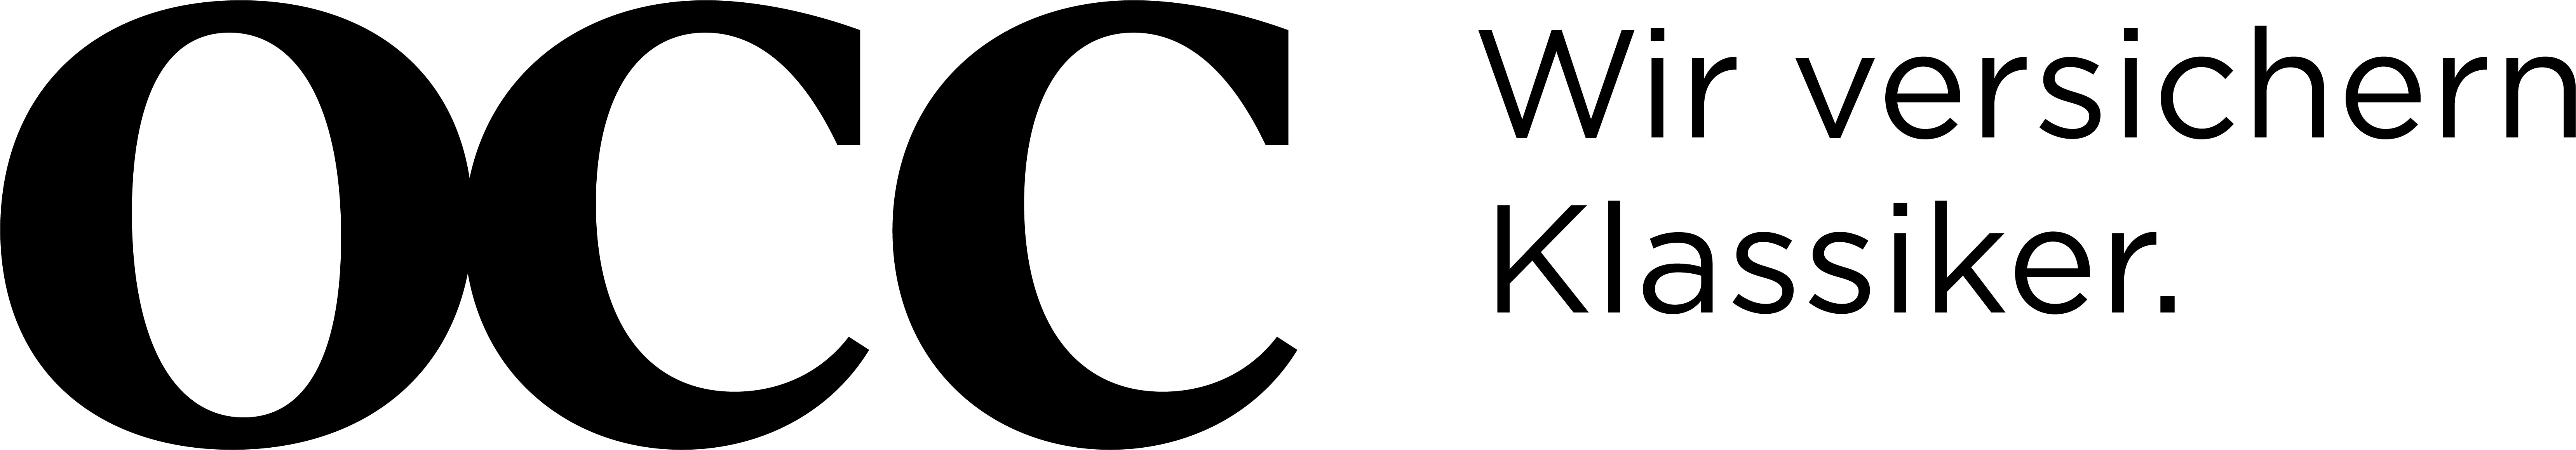 OCC Logo CMYK p mc